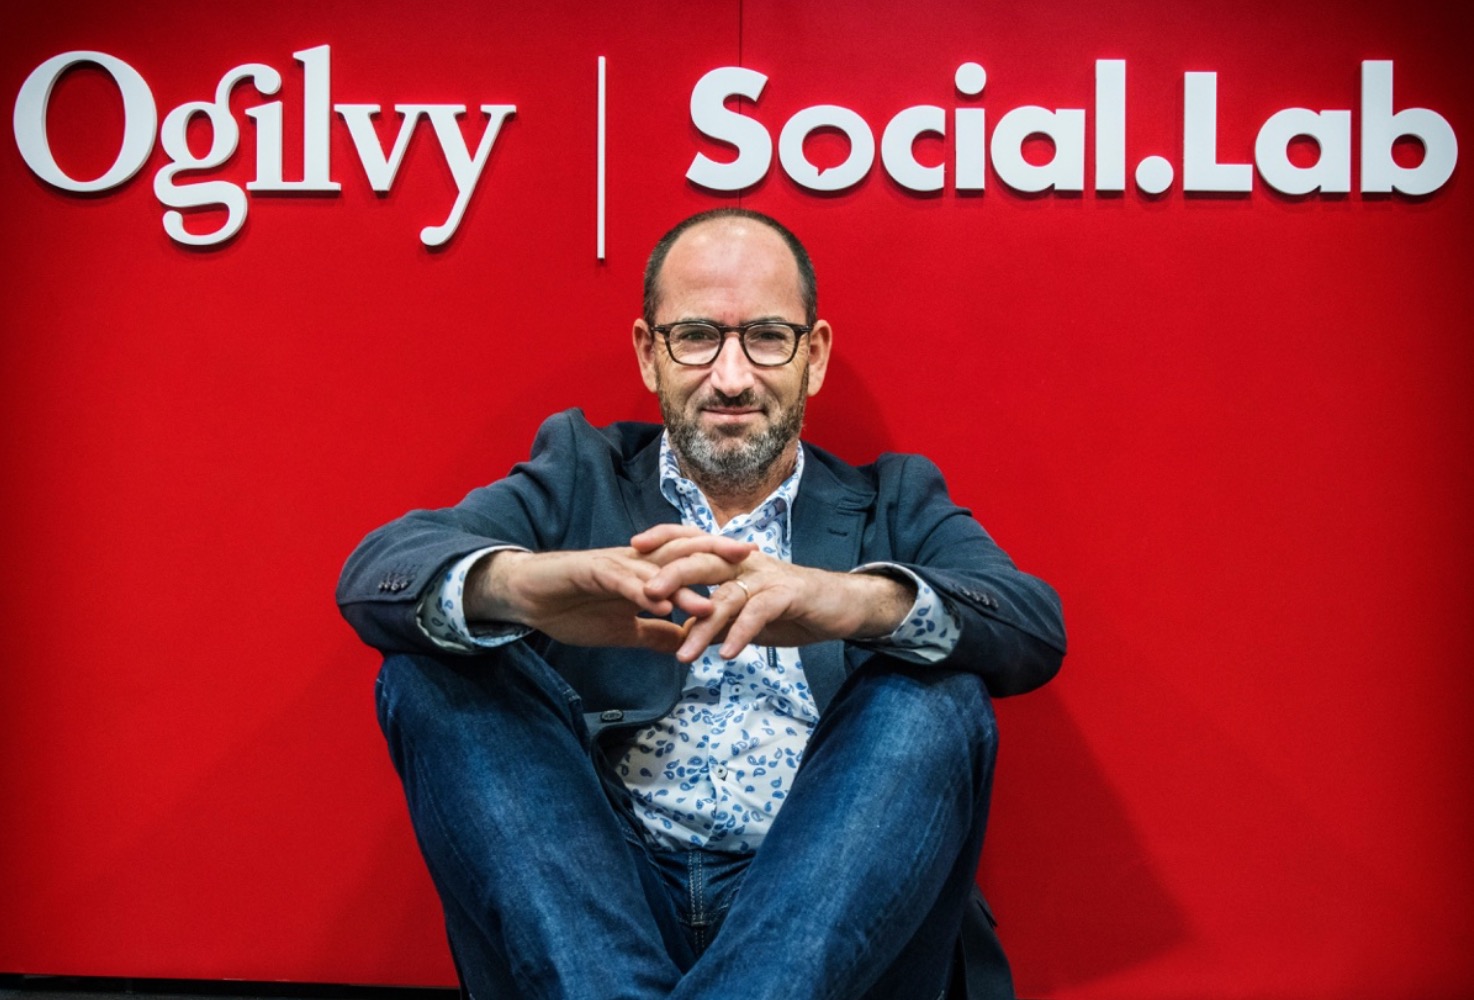 AOTY 2023 - Ogilvy Social.Lab, Innovator Agency: the reasons why